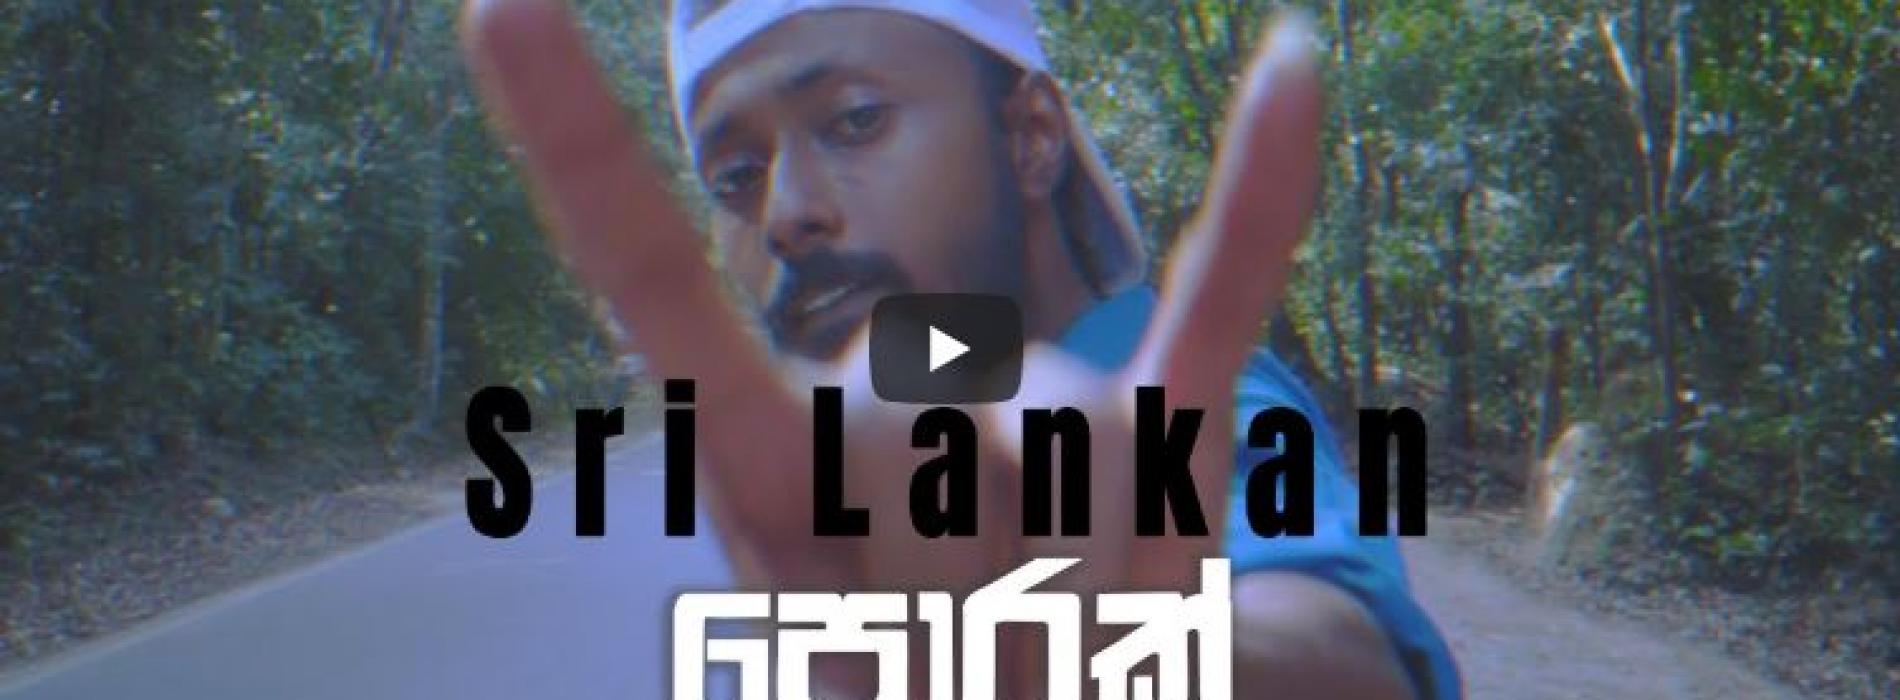 MasterD – Sri Lankan Porak(ශ්‍රී ලංකන් පොරක්) Official Music Video